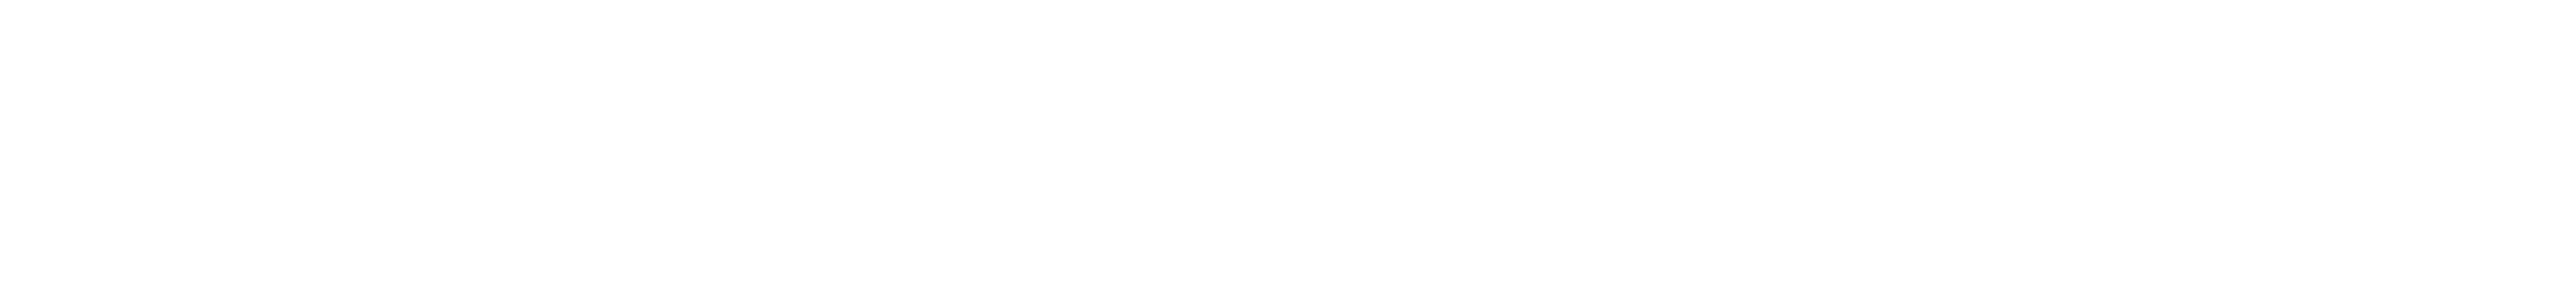 SF_SpaceSymposium_logo_reversed